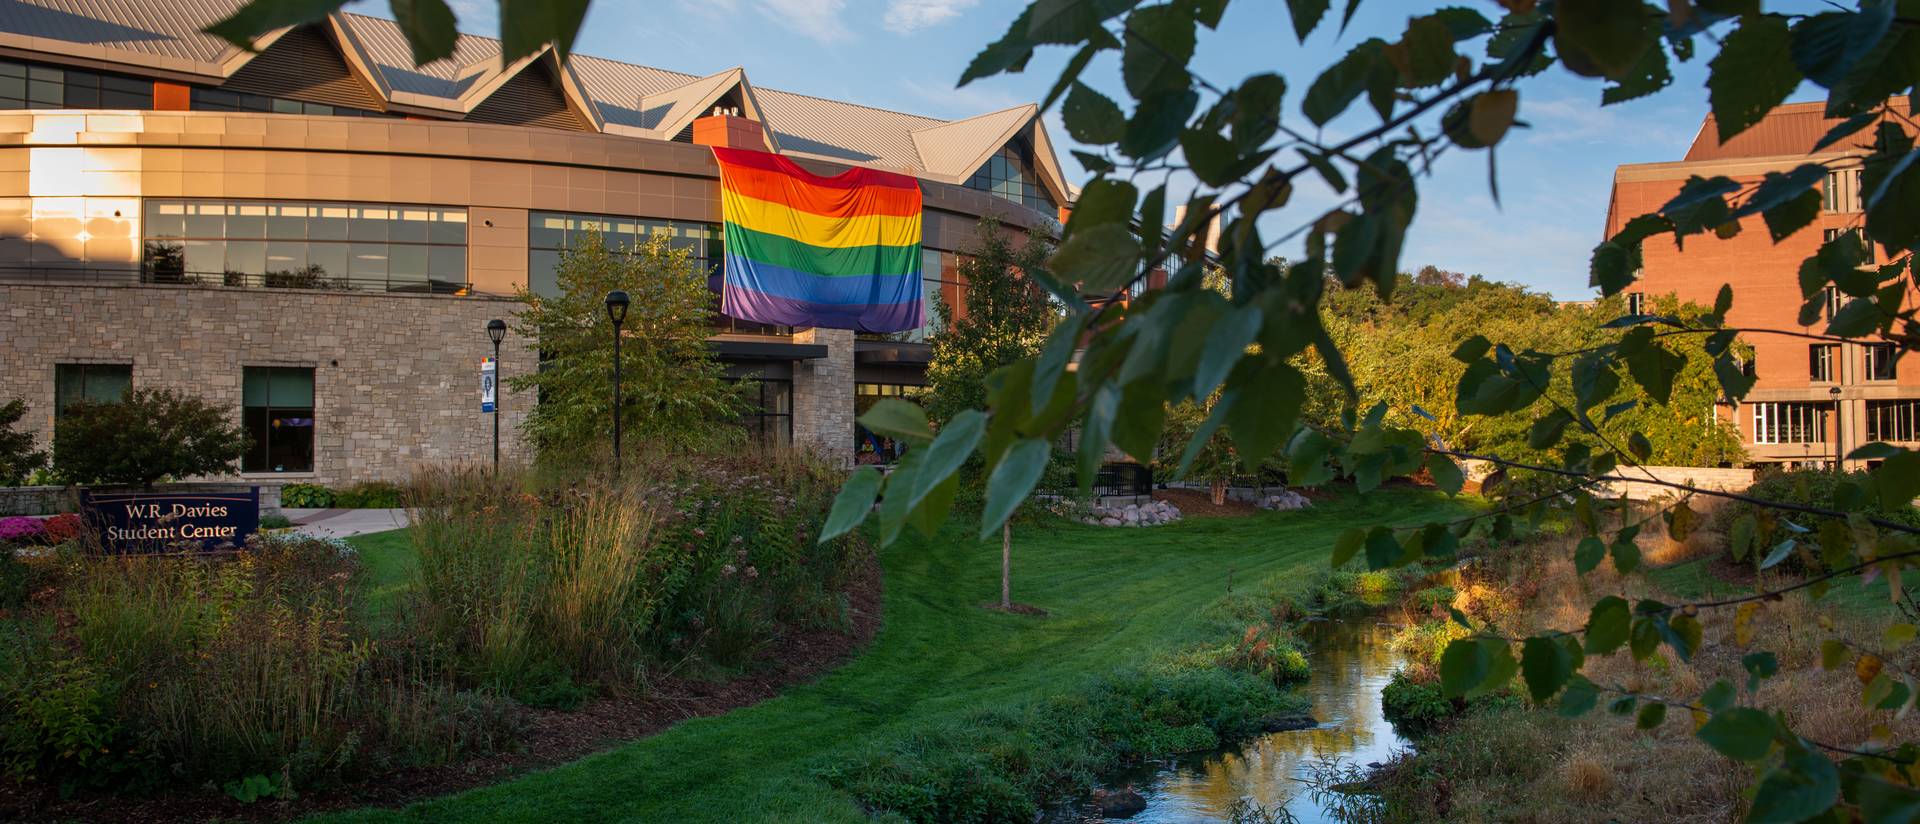 Pride Flag hangs from the Davie's Center